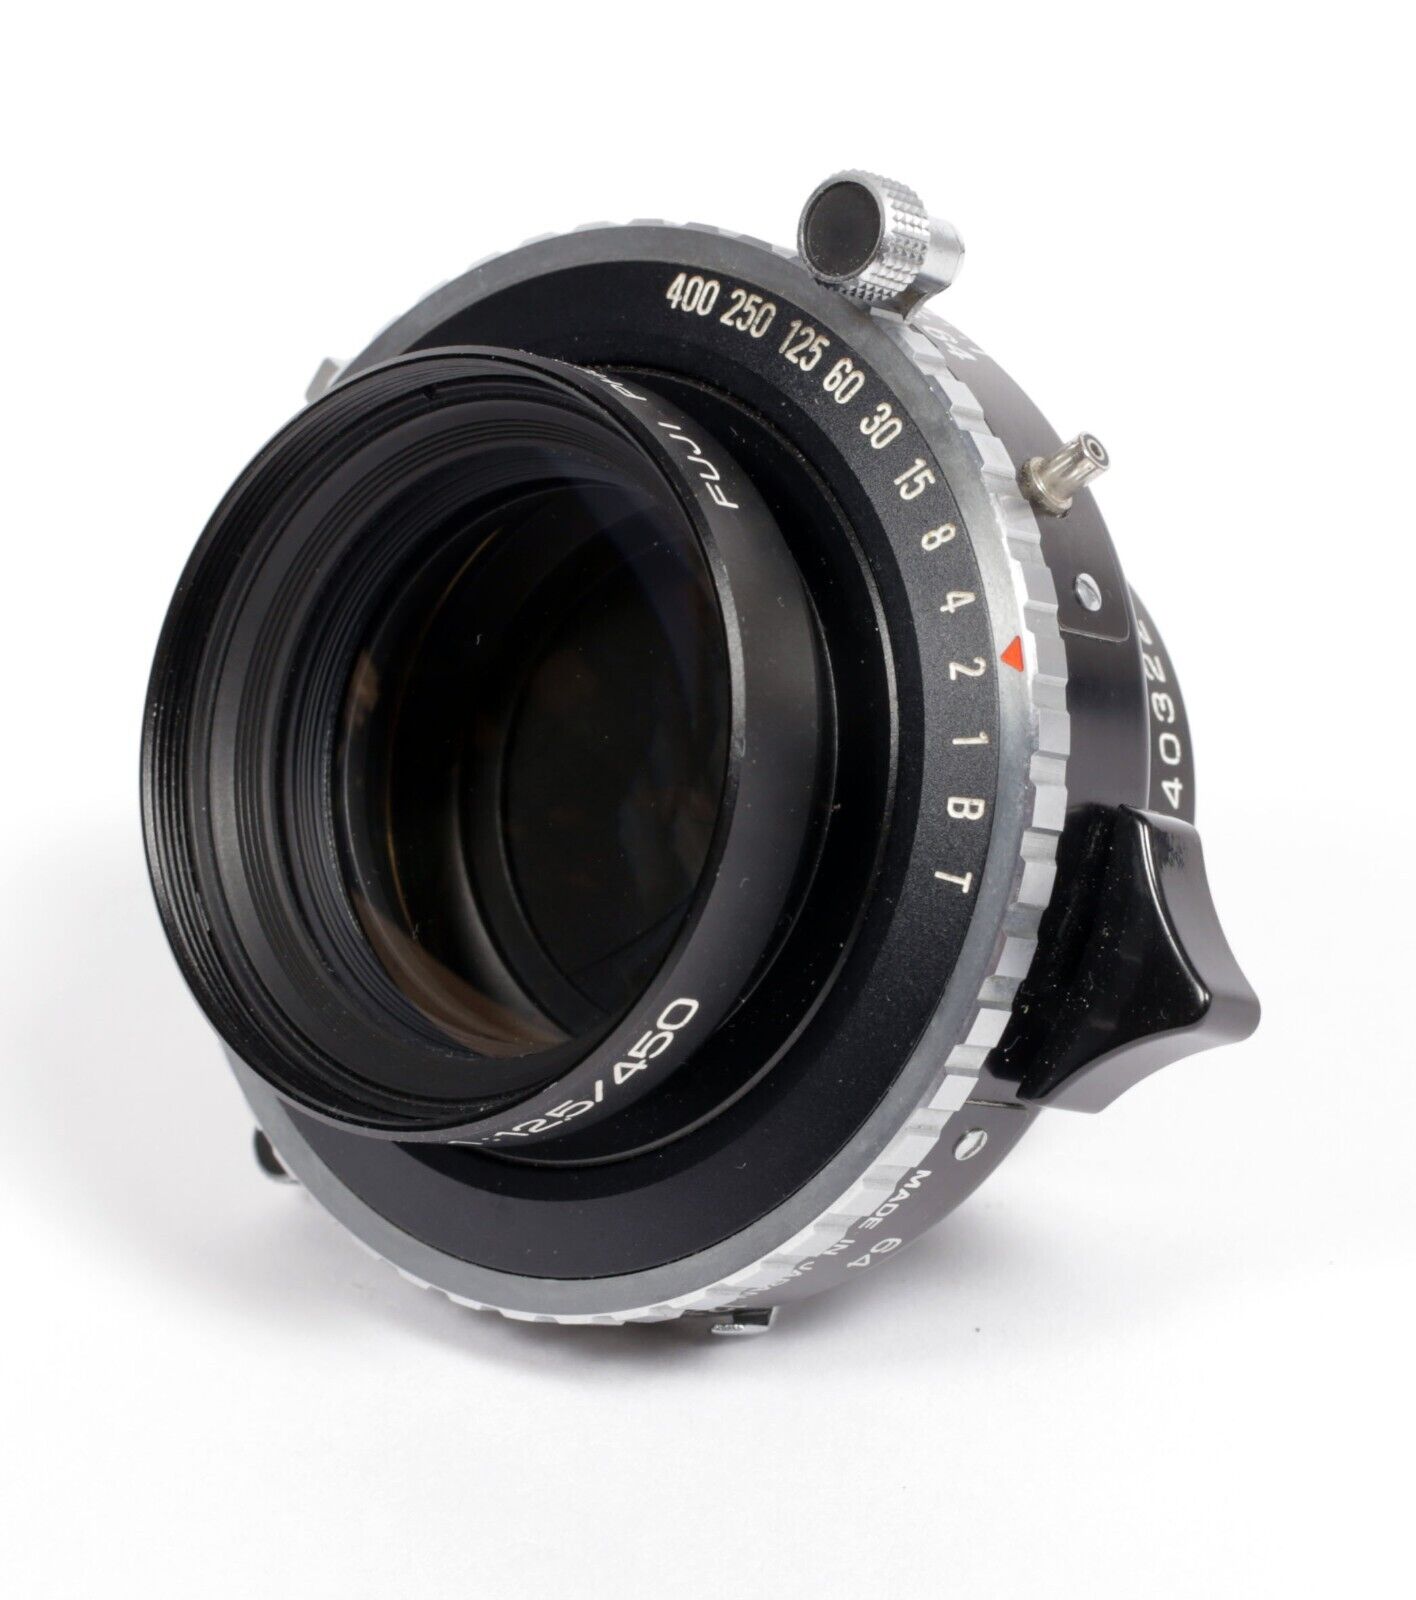 Fuji Fujinon C 450mm F12.5 lens in Copal #1 shutter #322 | CatLABS